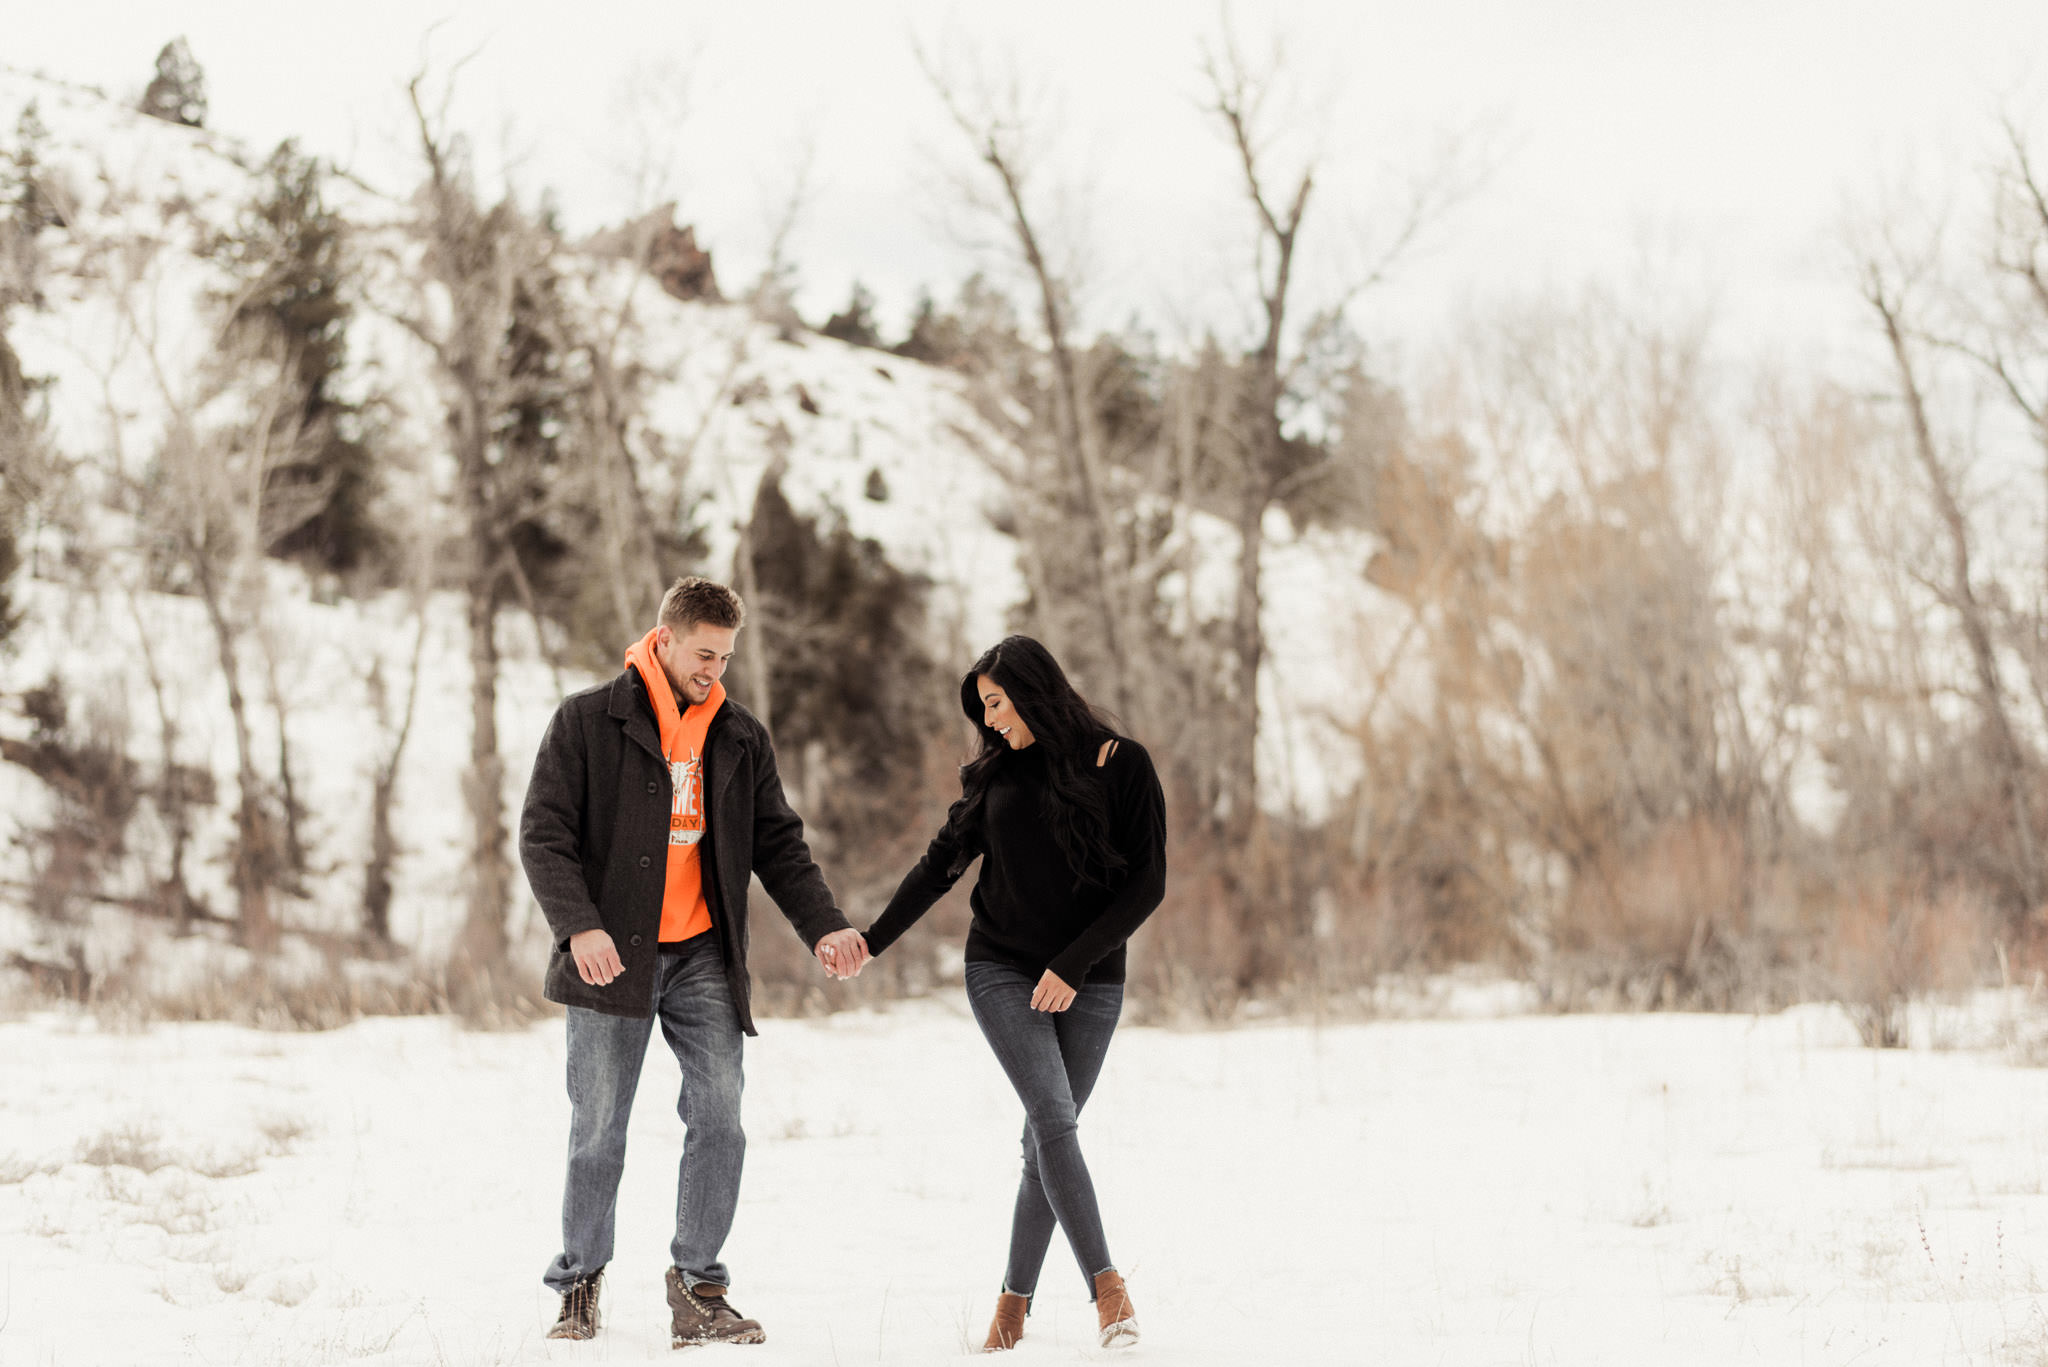 sandra-ryan-colorado-winter-snow-engagement-couples-valentines-red-houston-photographer-sm-36.jpg